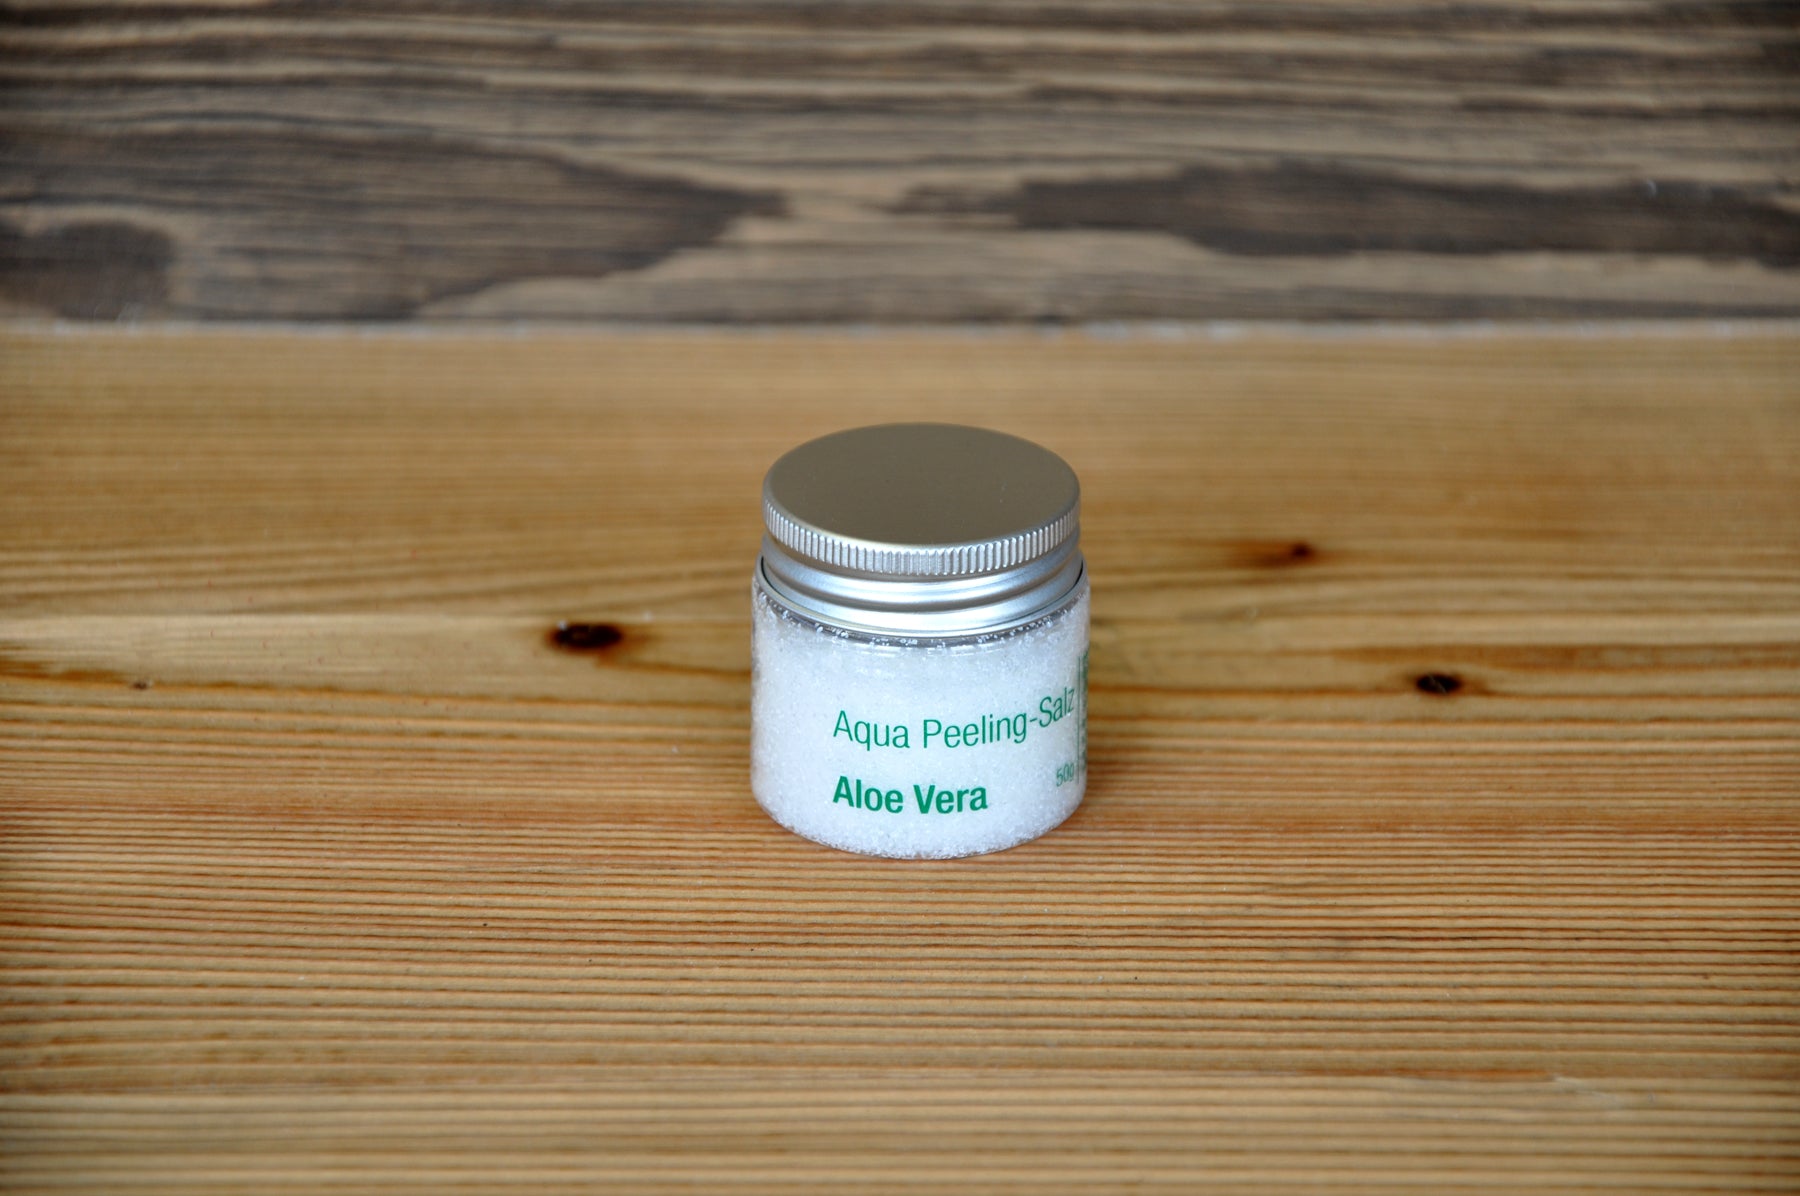 Aqua Peeling-Salz Aloe Vera